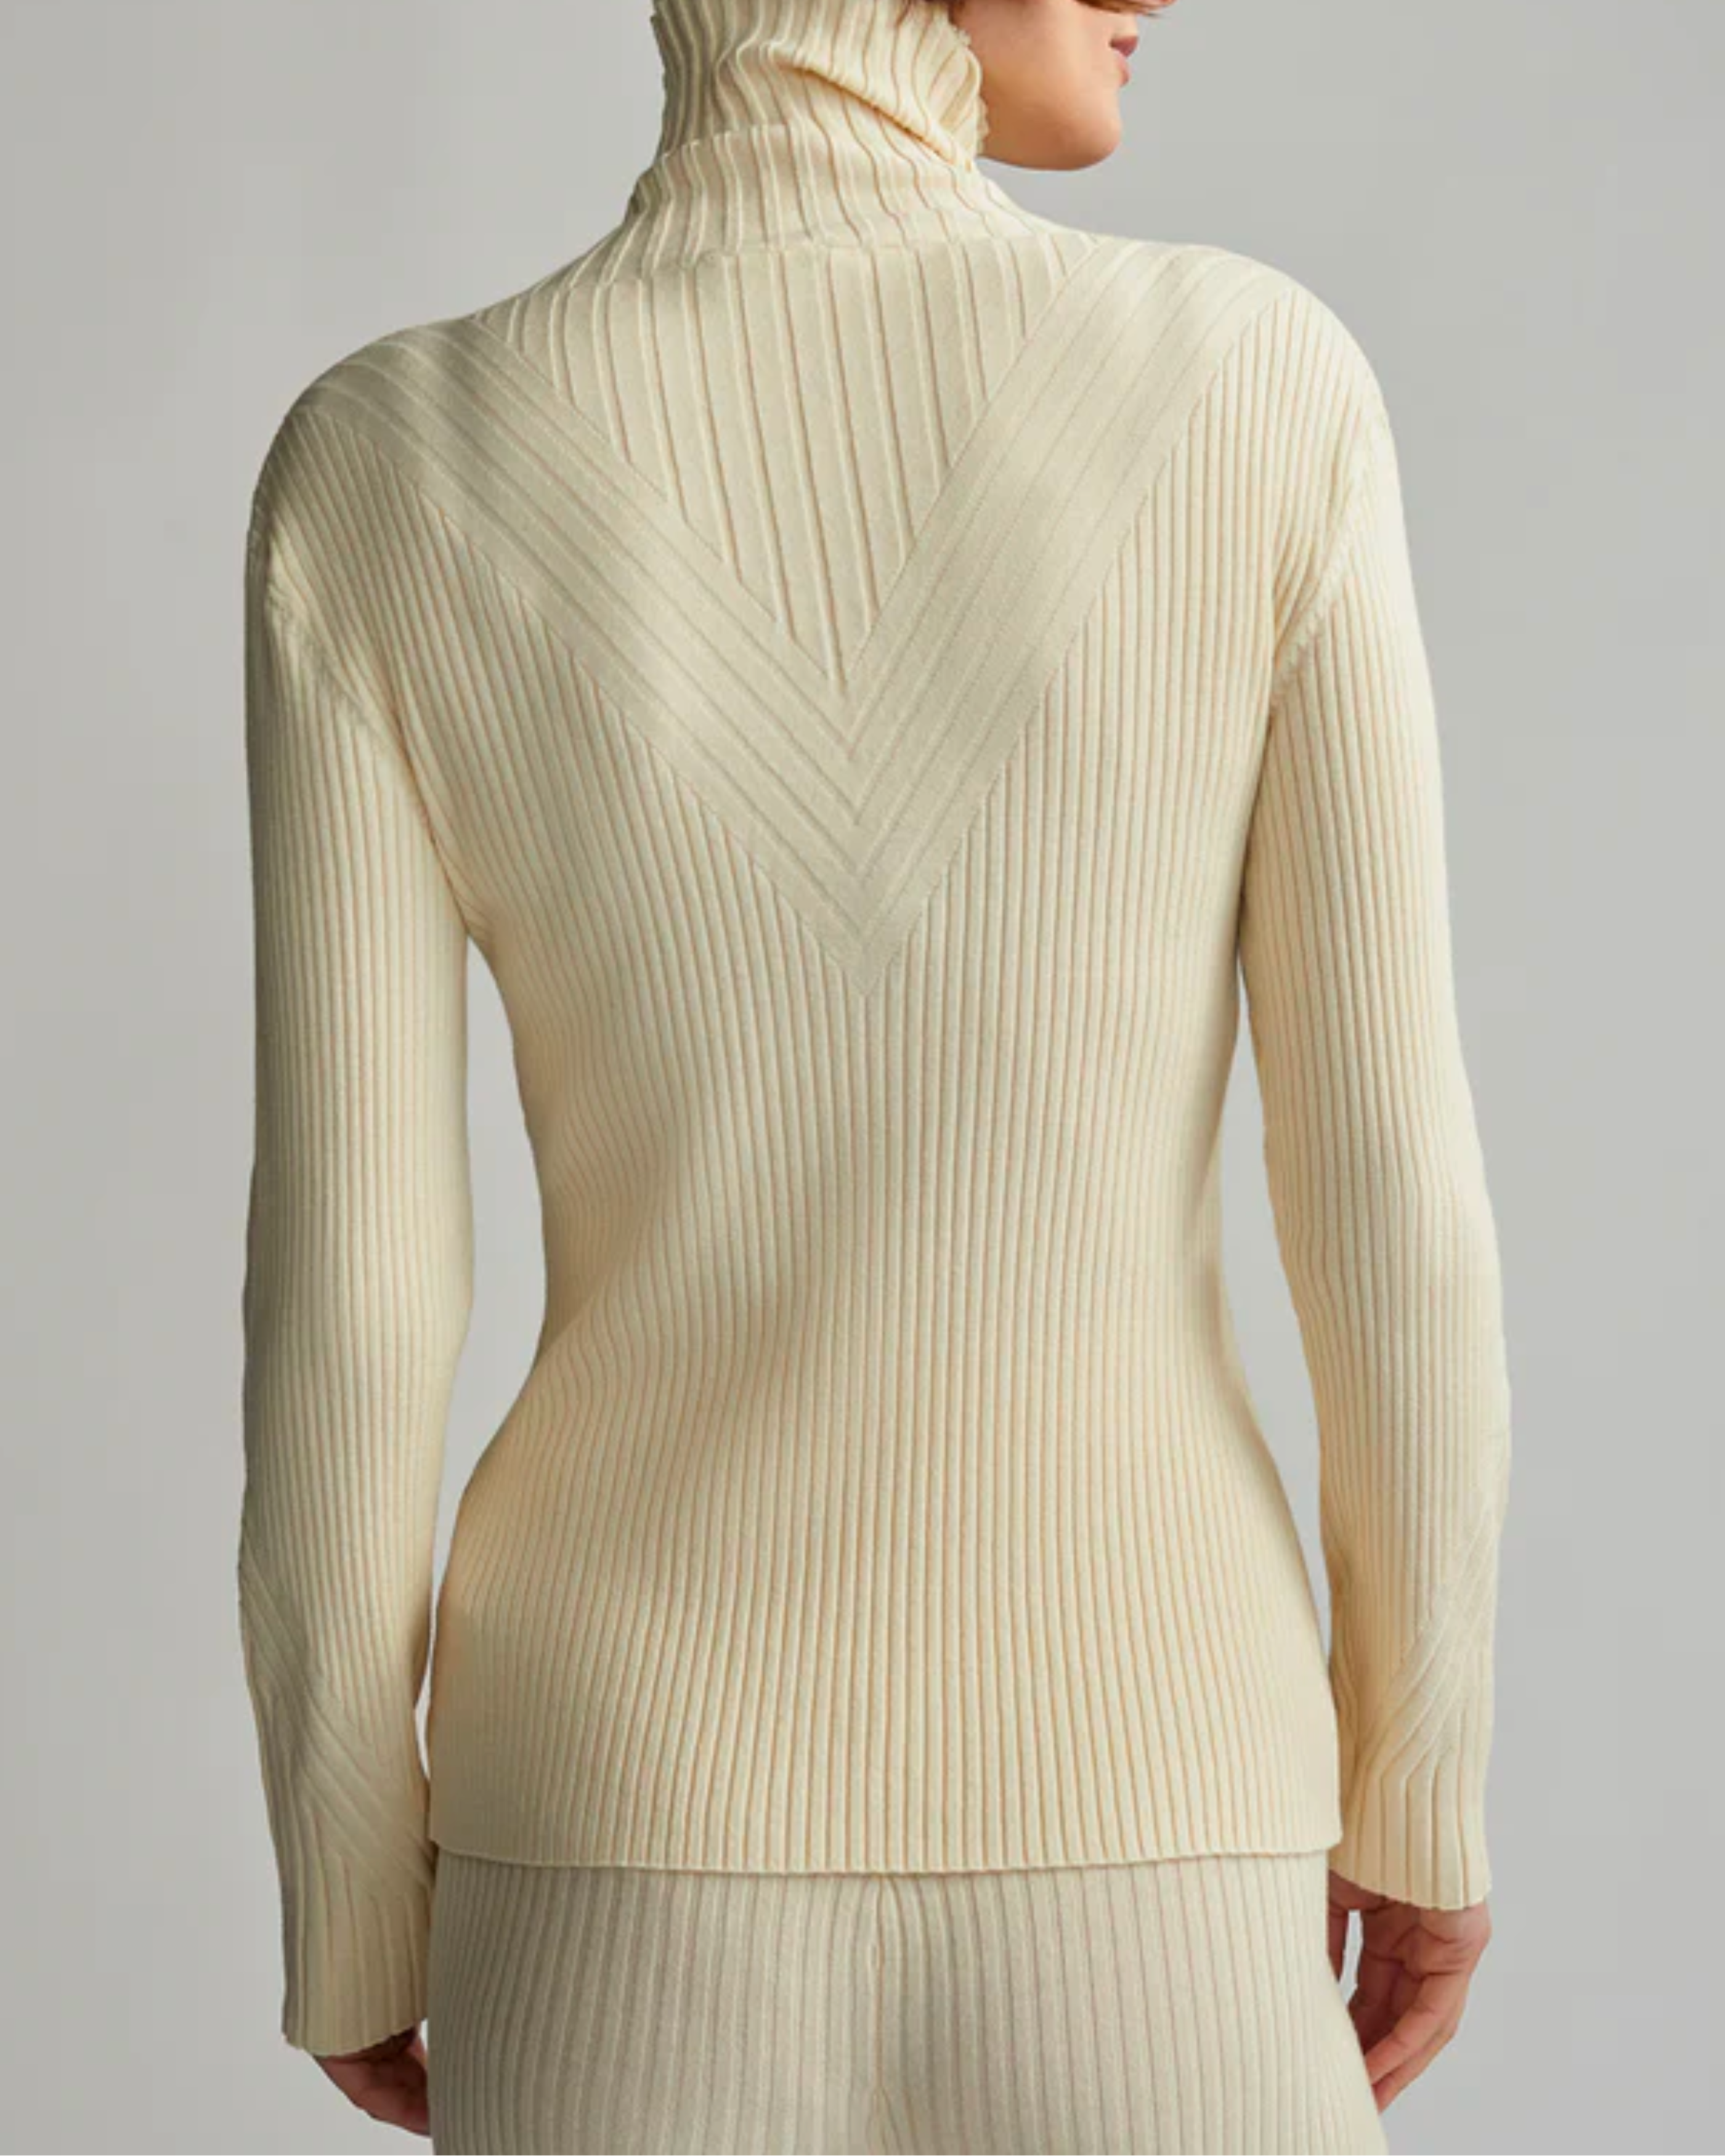 Varley Esma Rib Roll Neck Sweater in White Cap Grey